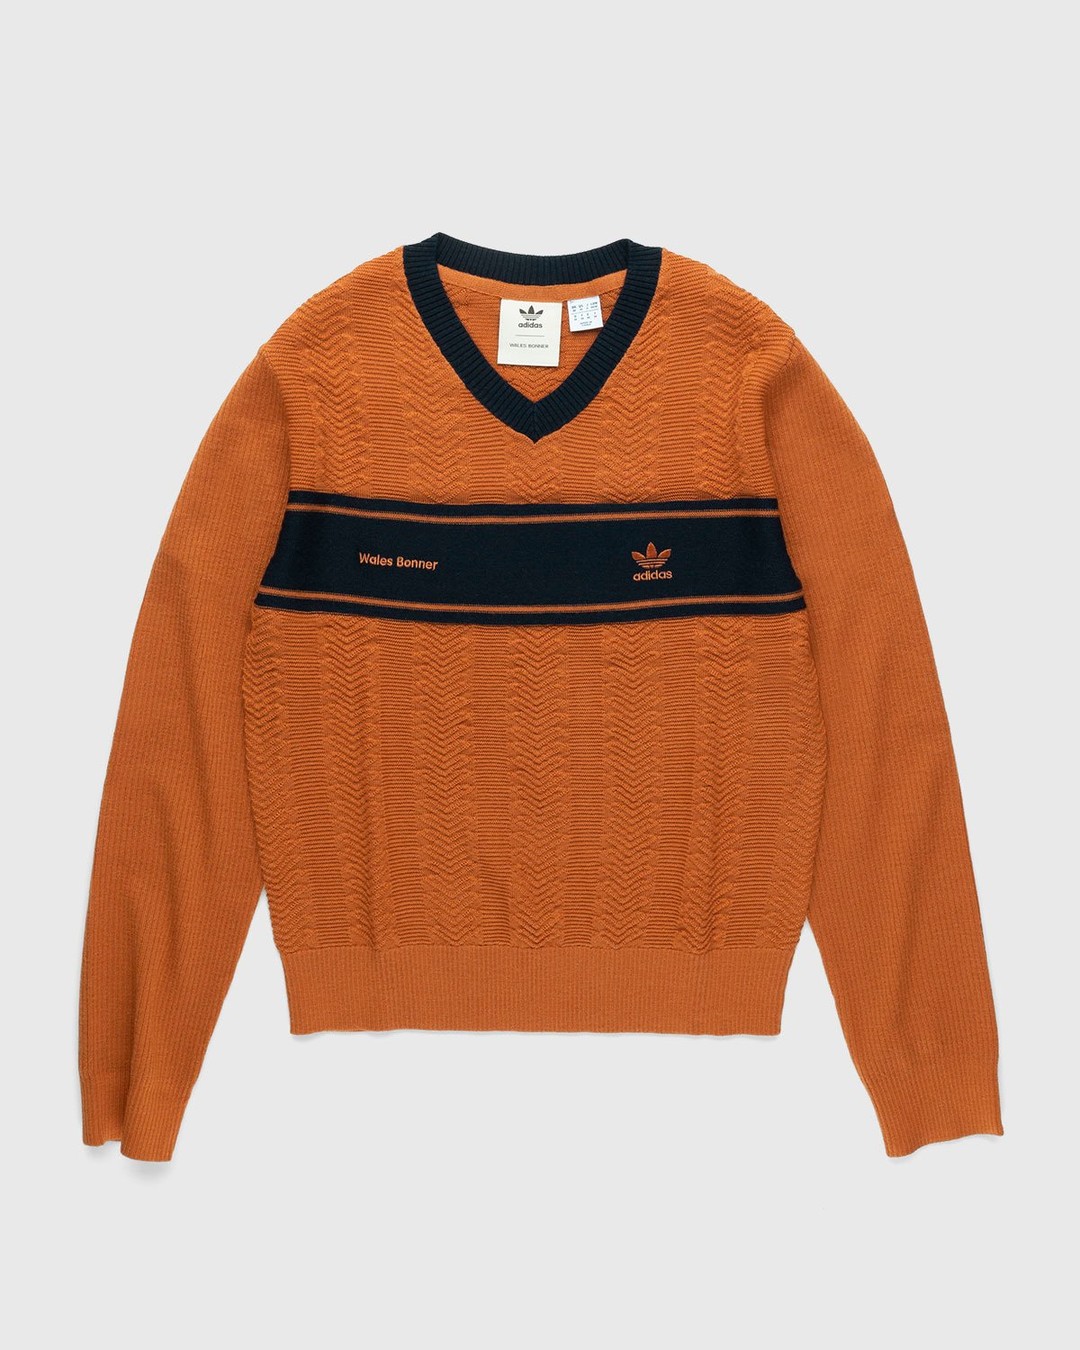 Adidas x Wales Bonner – Knit Longsleeve - V-Necks Knitwear - Orange - Image 1